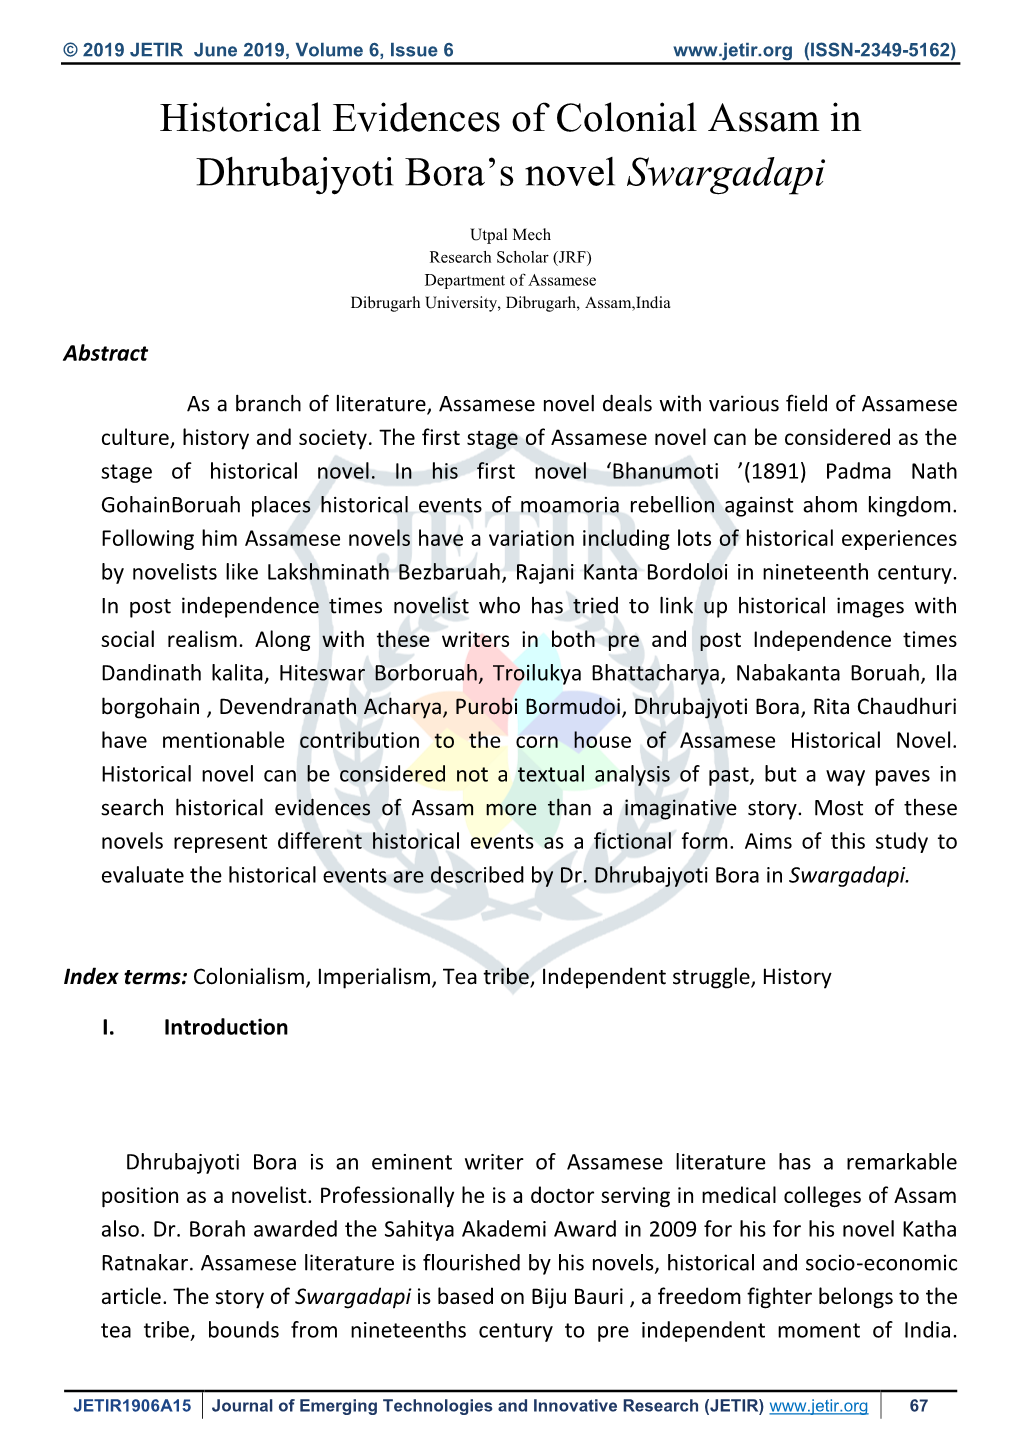 Historical Evidences of Colonial Assam in Dhrubajyoti Bora's Novel